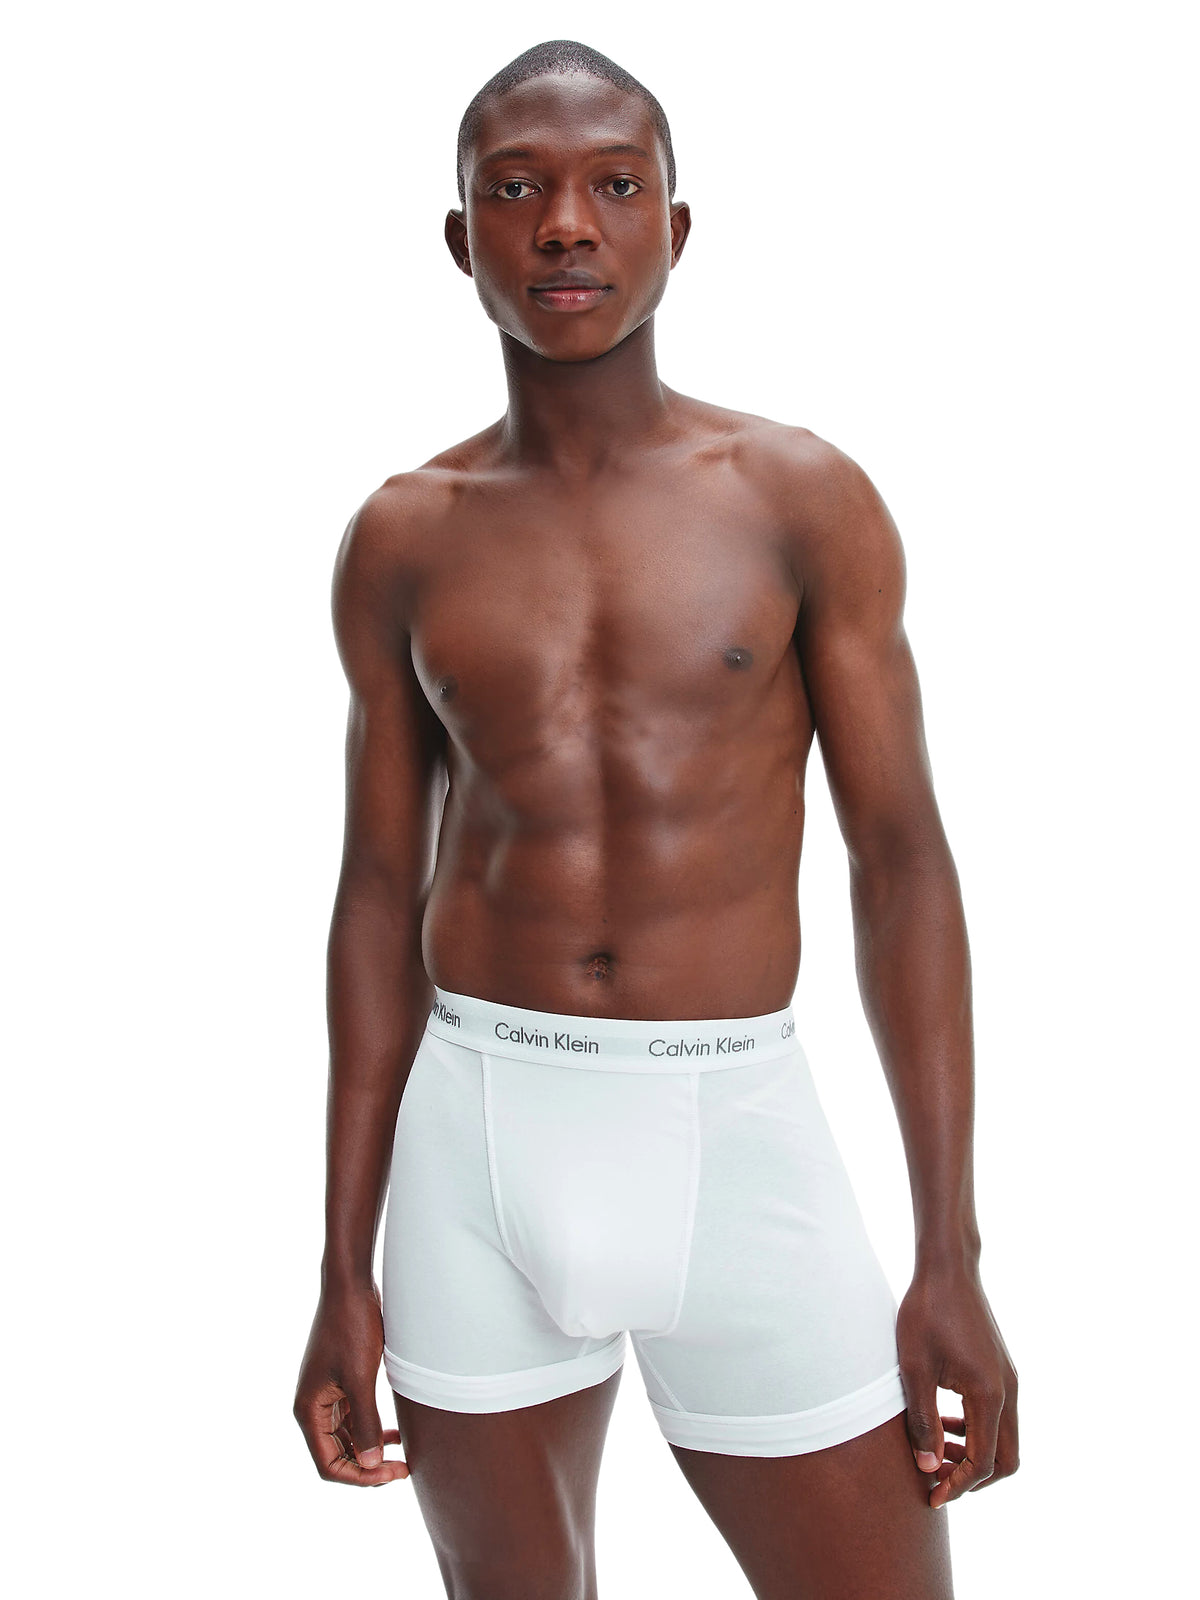 Calvin Klein Stretch Boxer Shorts/ Trunks (3-Pack) - White/ B&W Stripe/ Black, 07, U2662G_IOT, White/ B&W Stripe/ Black